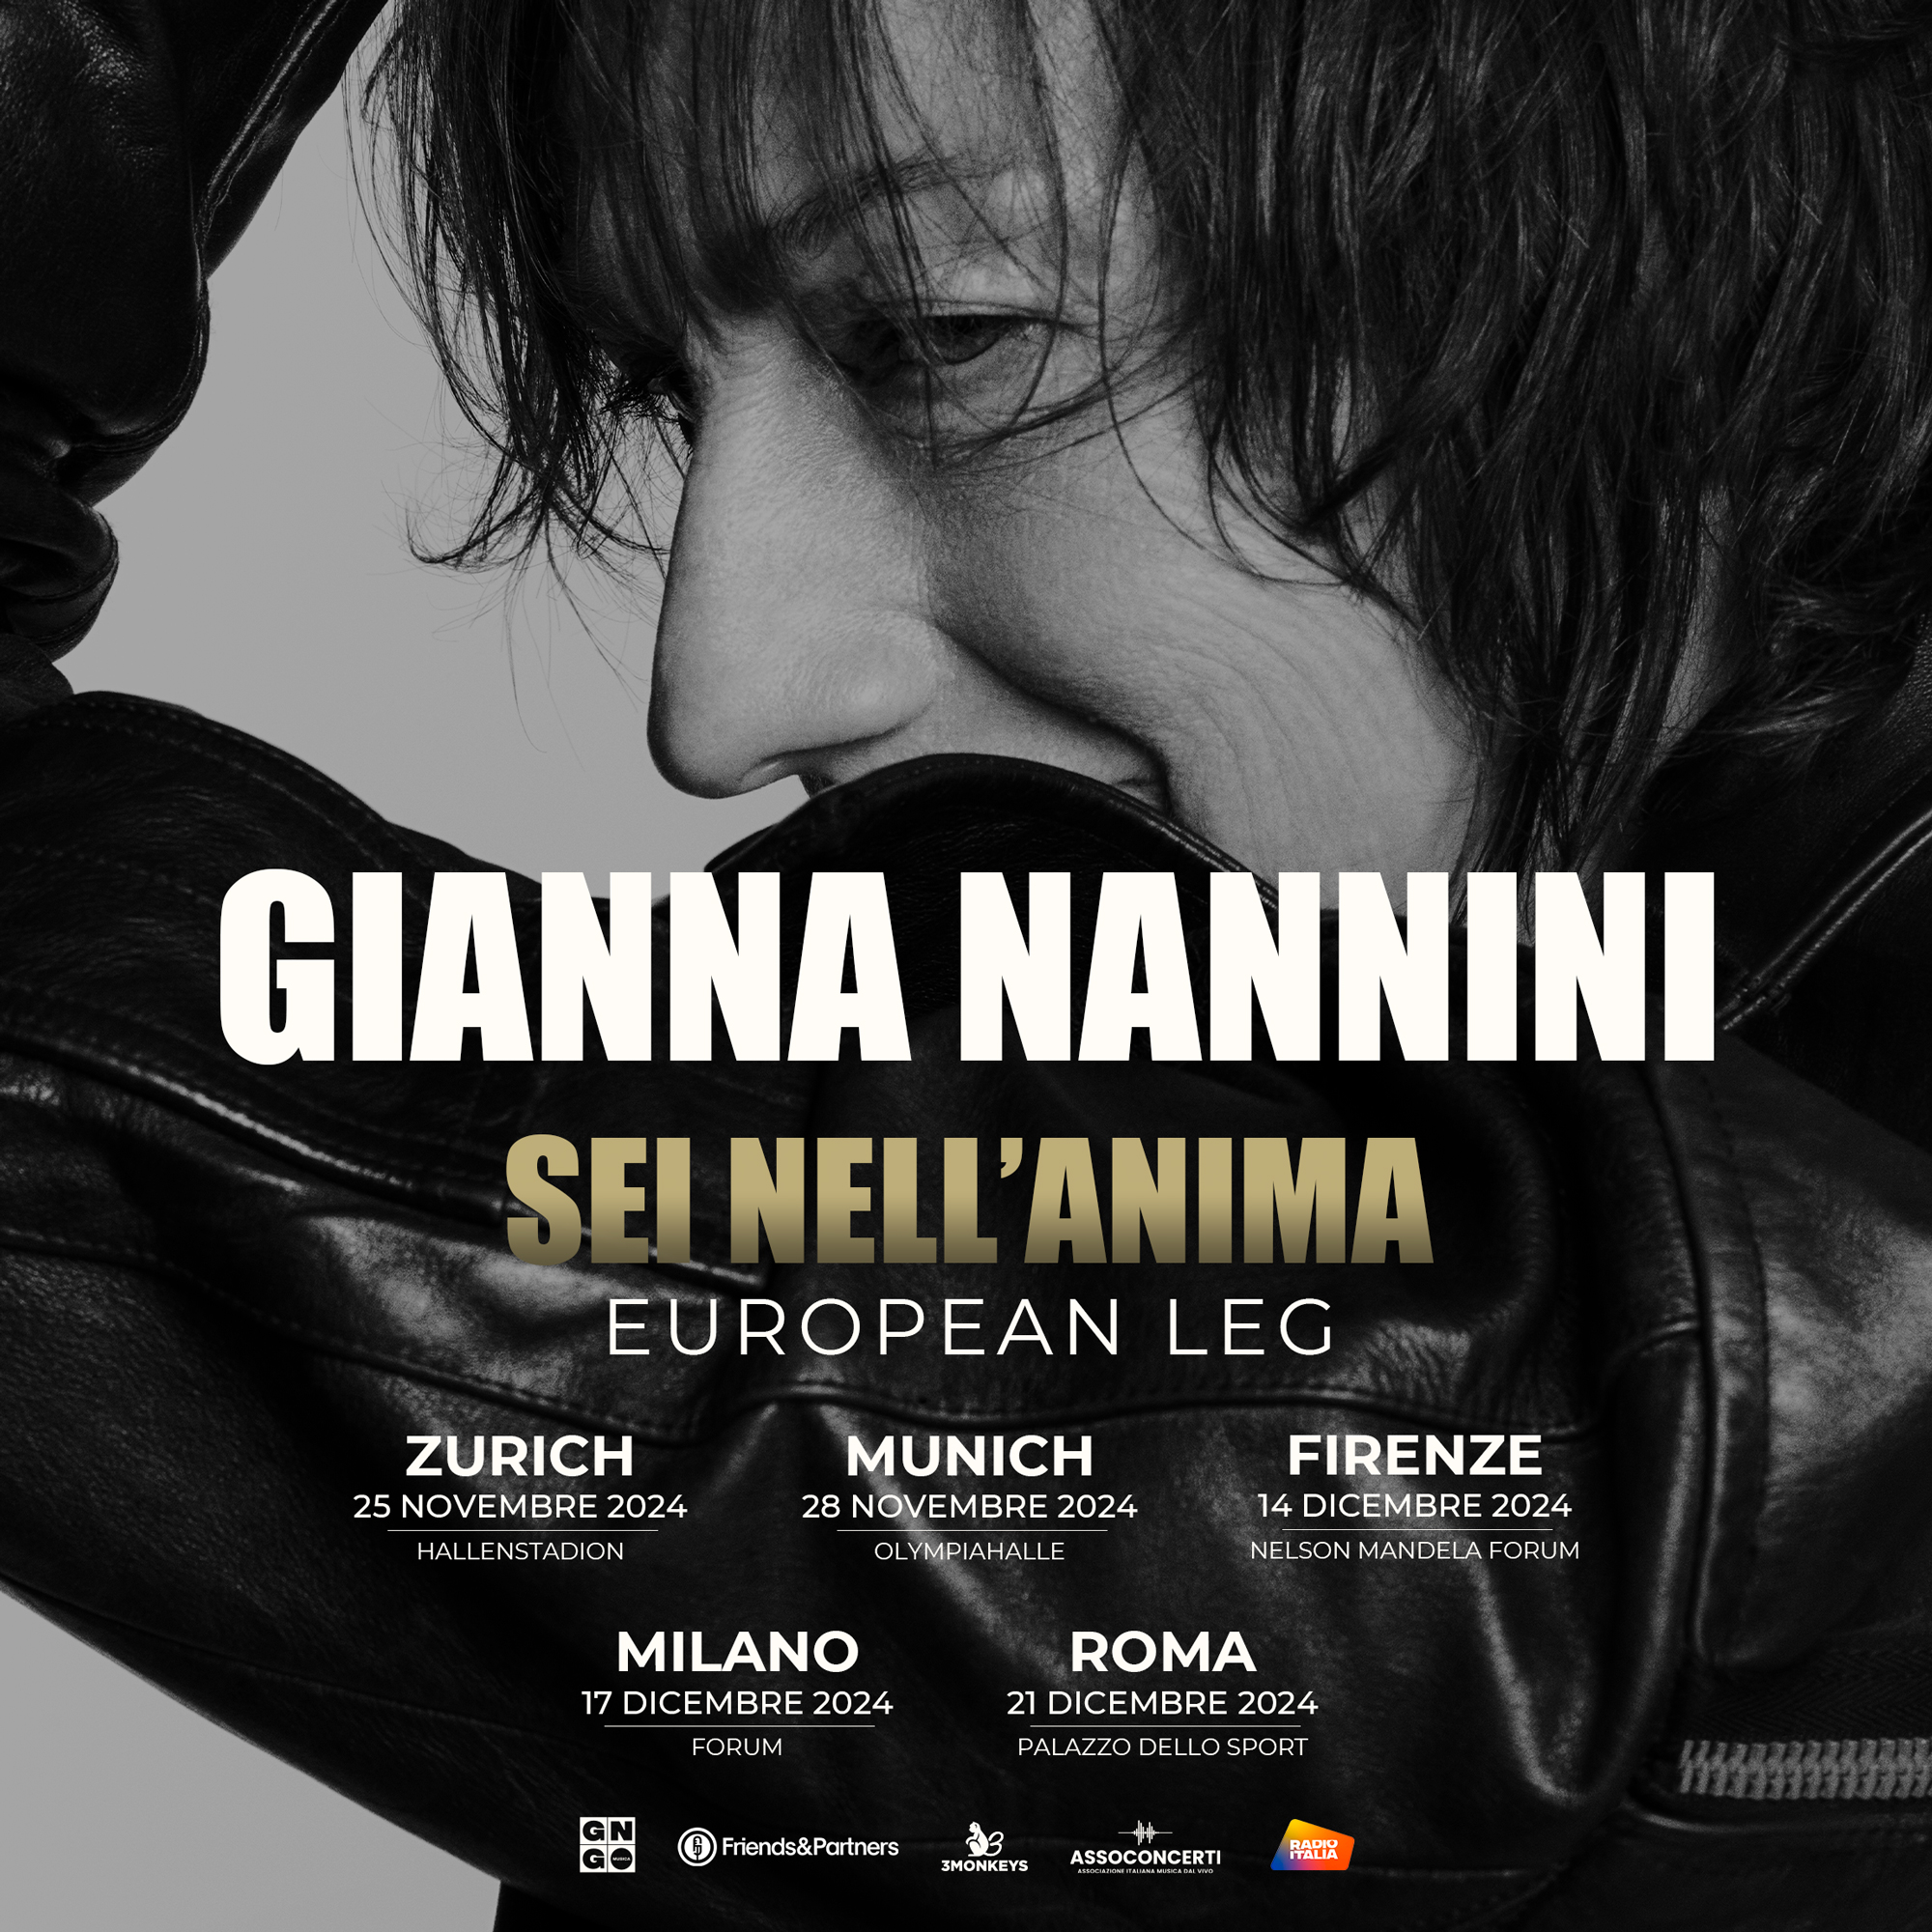 Gianna Nannini - Sei Nell'anima in der Jahrhunderthalle Tickets